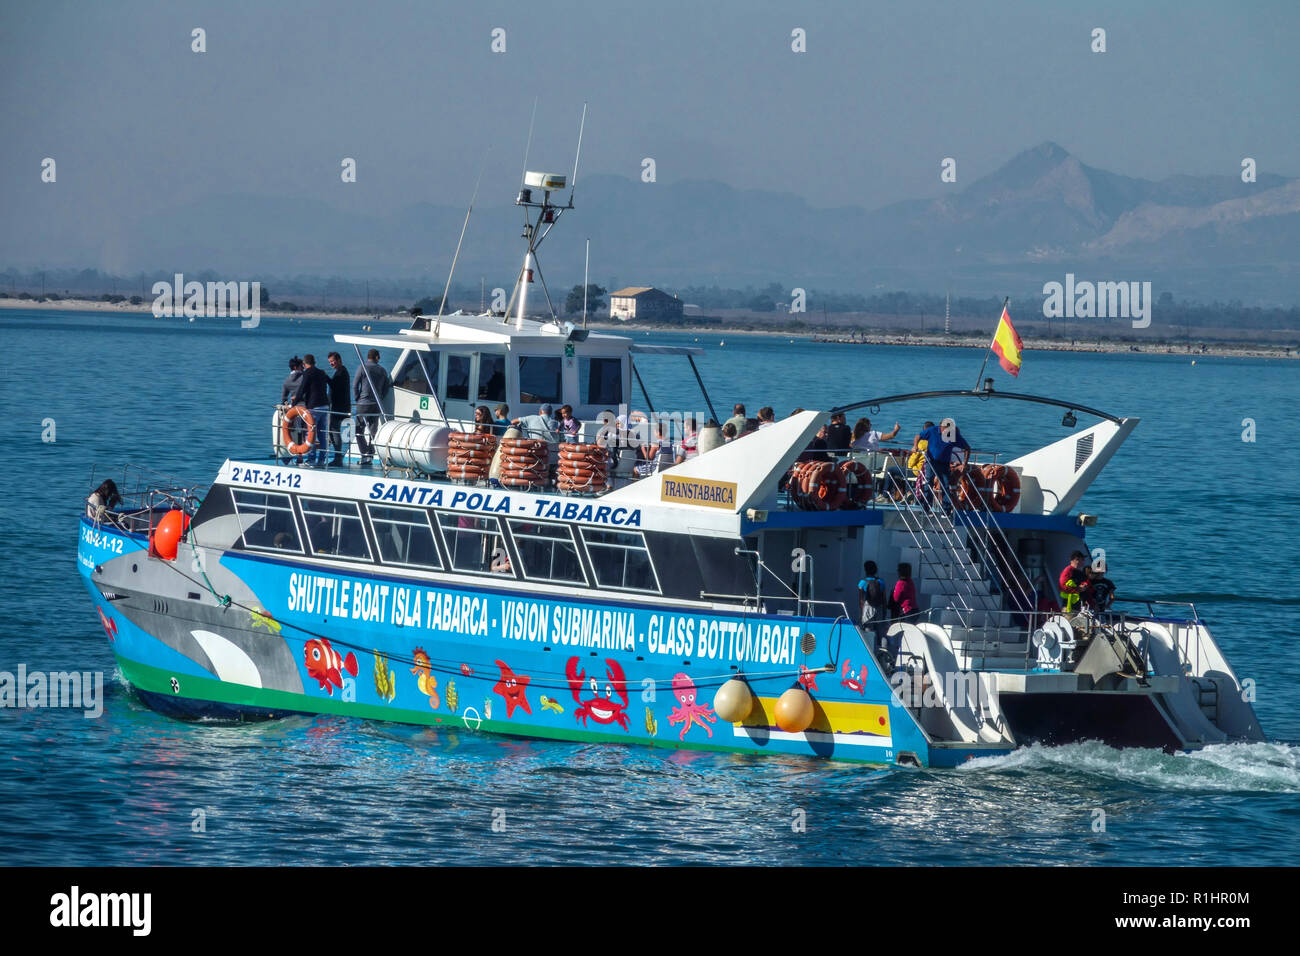 Spanien Urlaub Santa Pola, Leute auf Shuttle-Boot Santa Pola - Tabarca Fähre, Costa Blanca Menschen in Spanien Stockfoto